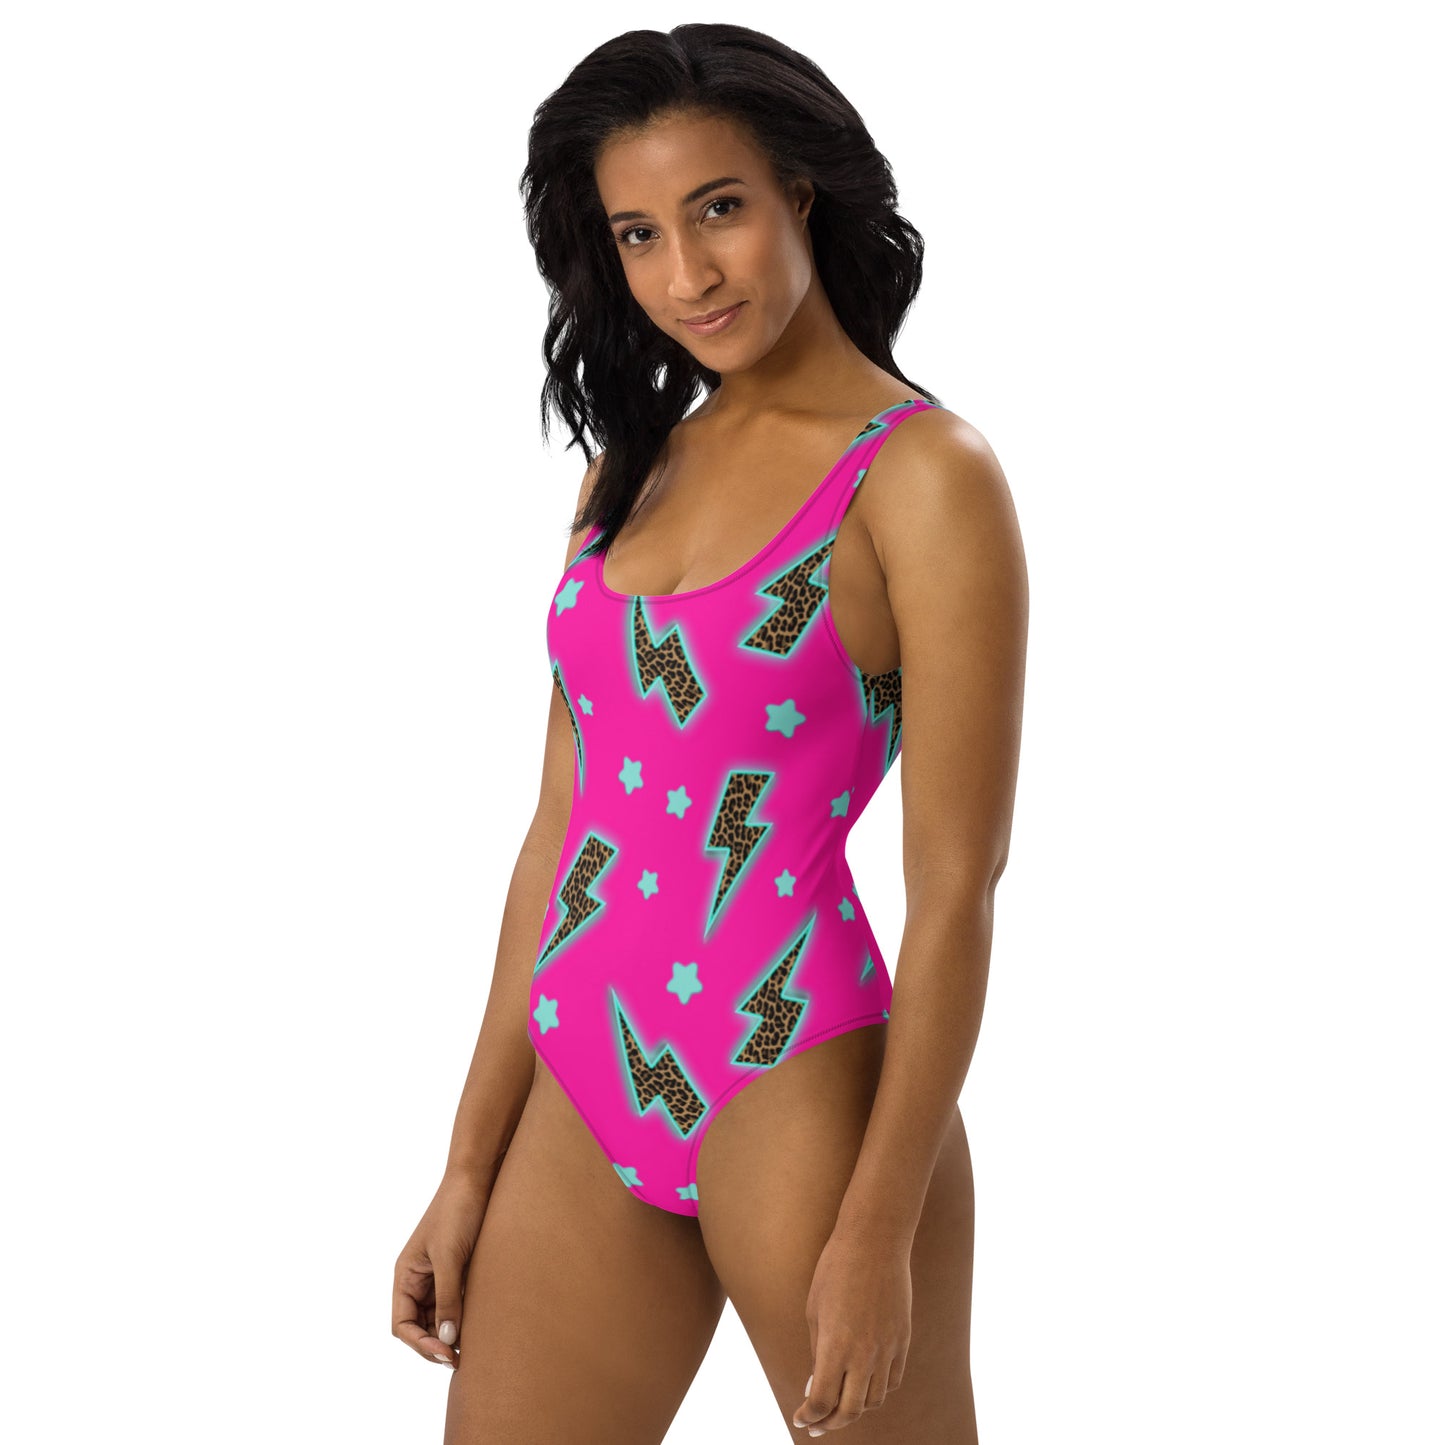 Yeehaw Leopard Lightning One-Piece Swimsuit